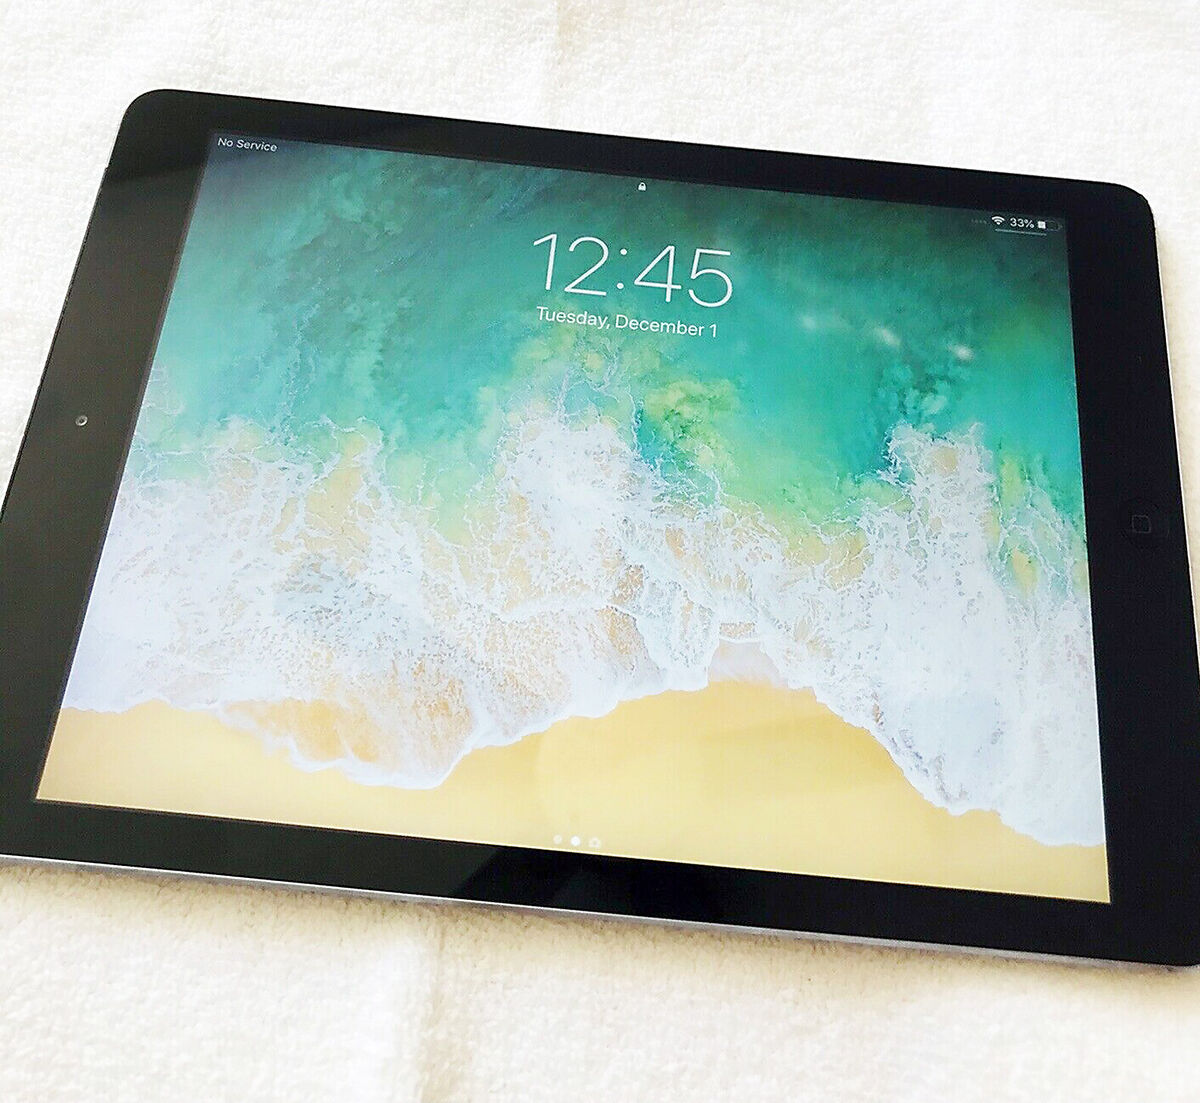 iPad Air 1 (November 2013) 16GB - Space Gray - (Wi-Fi) 9.7in